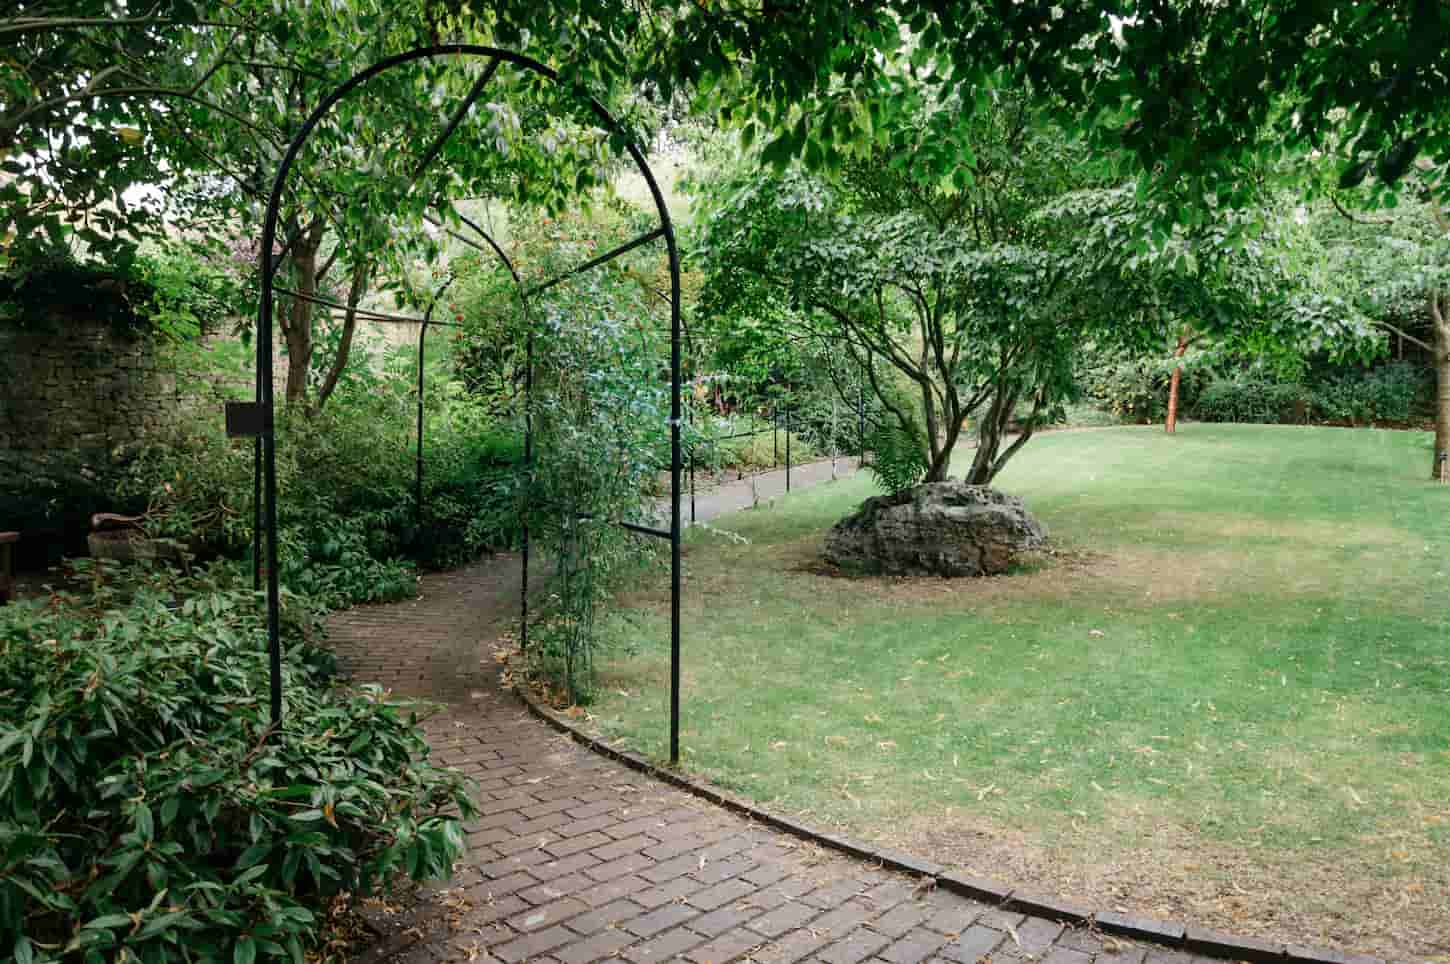 An image of a Pergola in the garden.